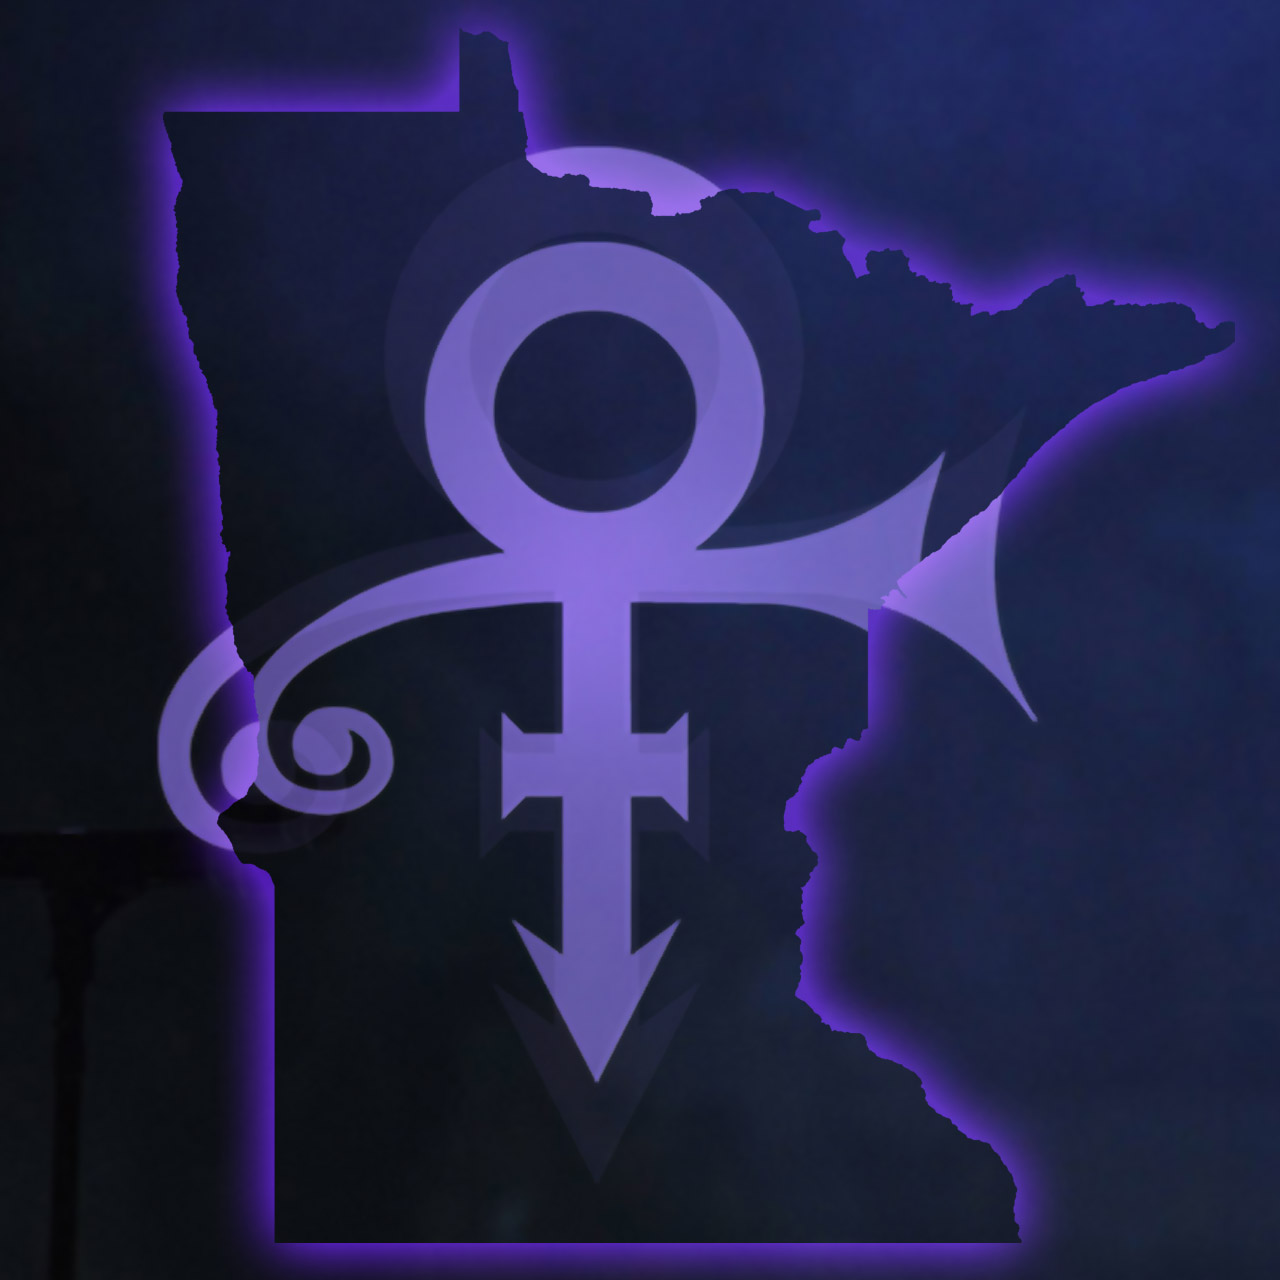 Prince symbol over Minnesota sports teams